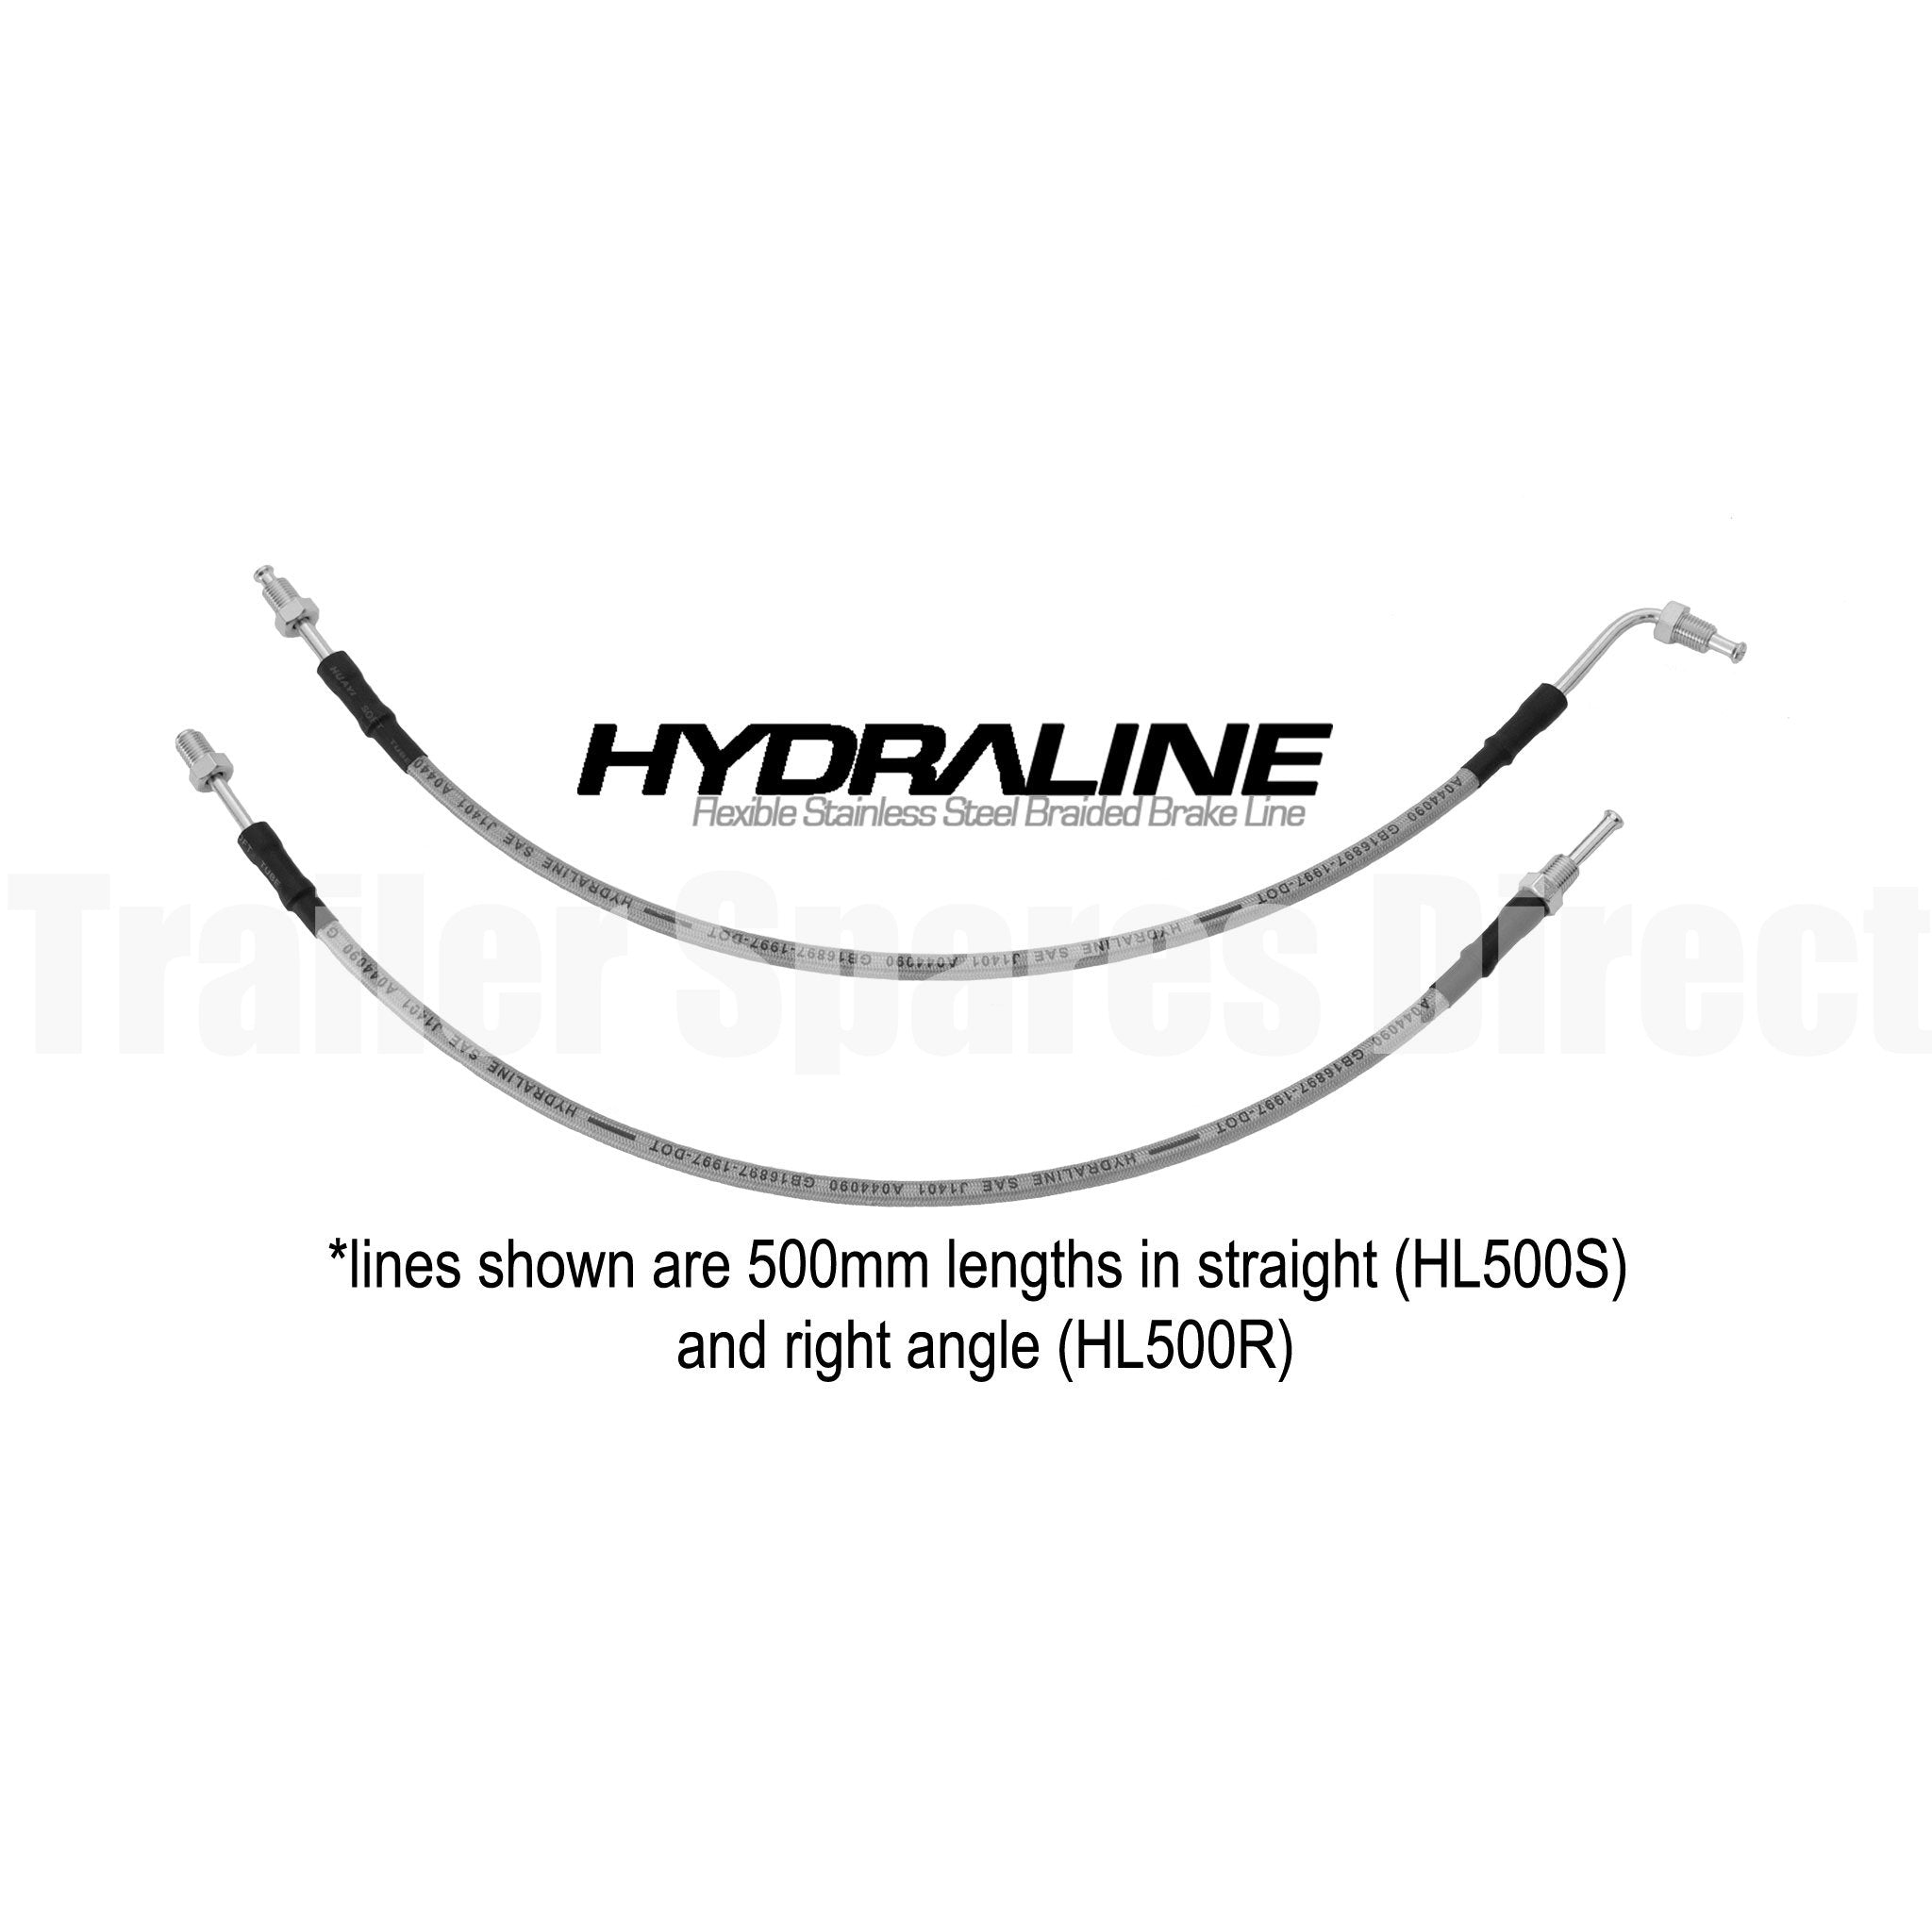 7500mm HydraLine brake hose